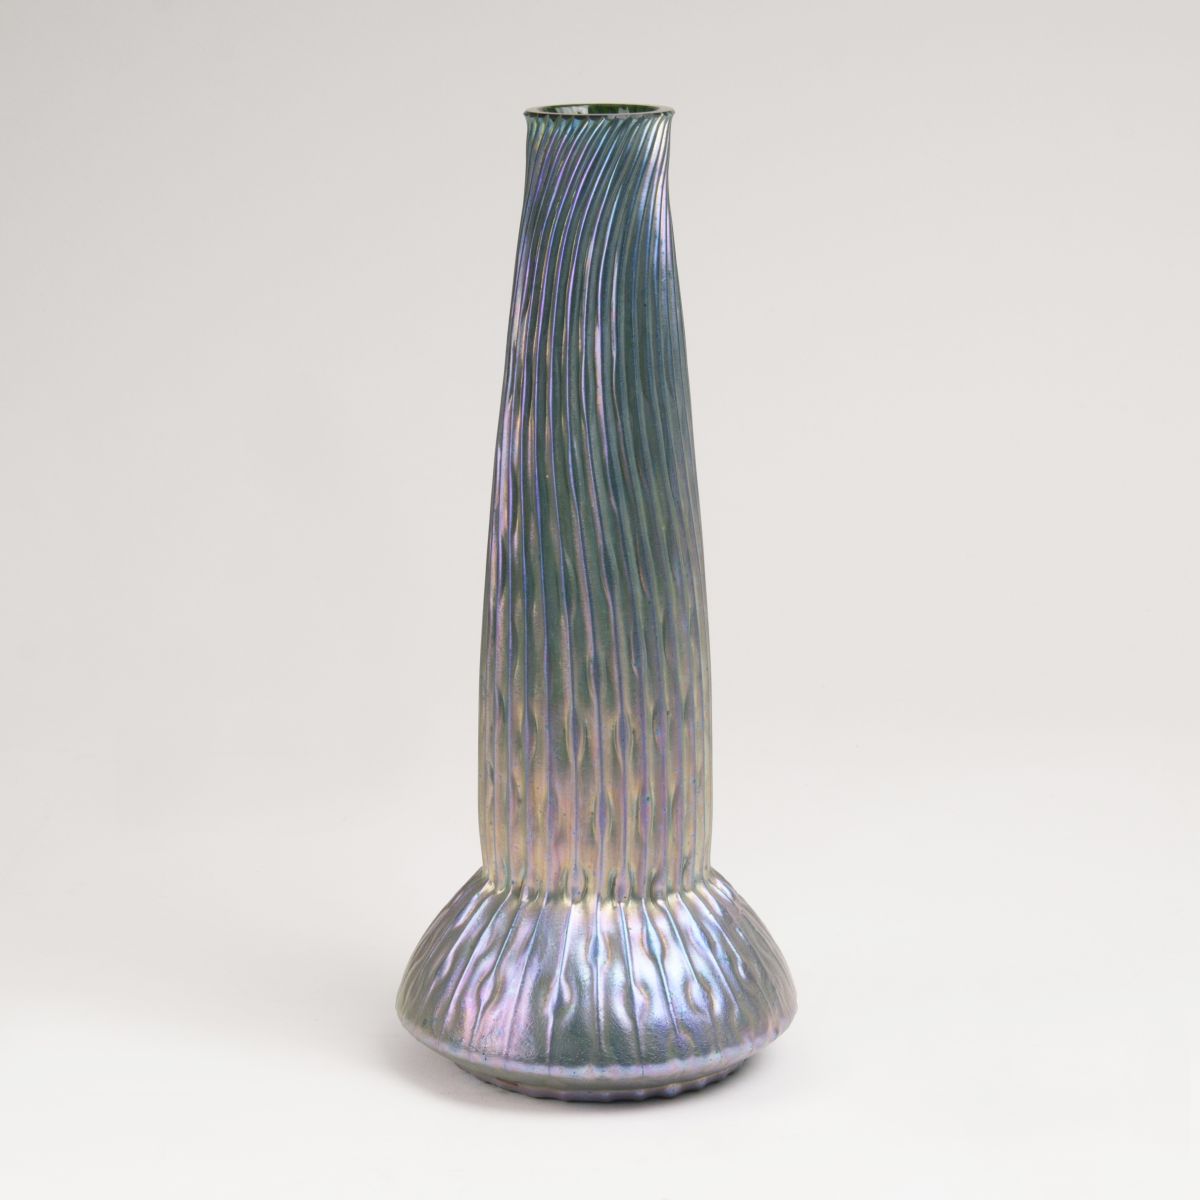 A Kralik Art Nouveau Vase with Sea Urchin